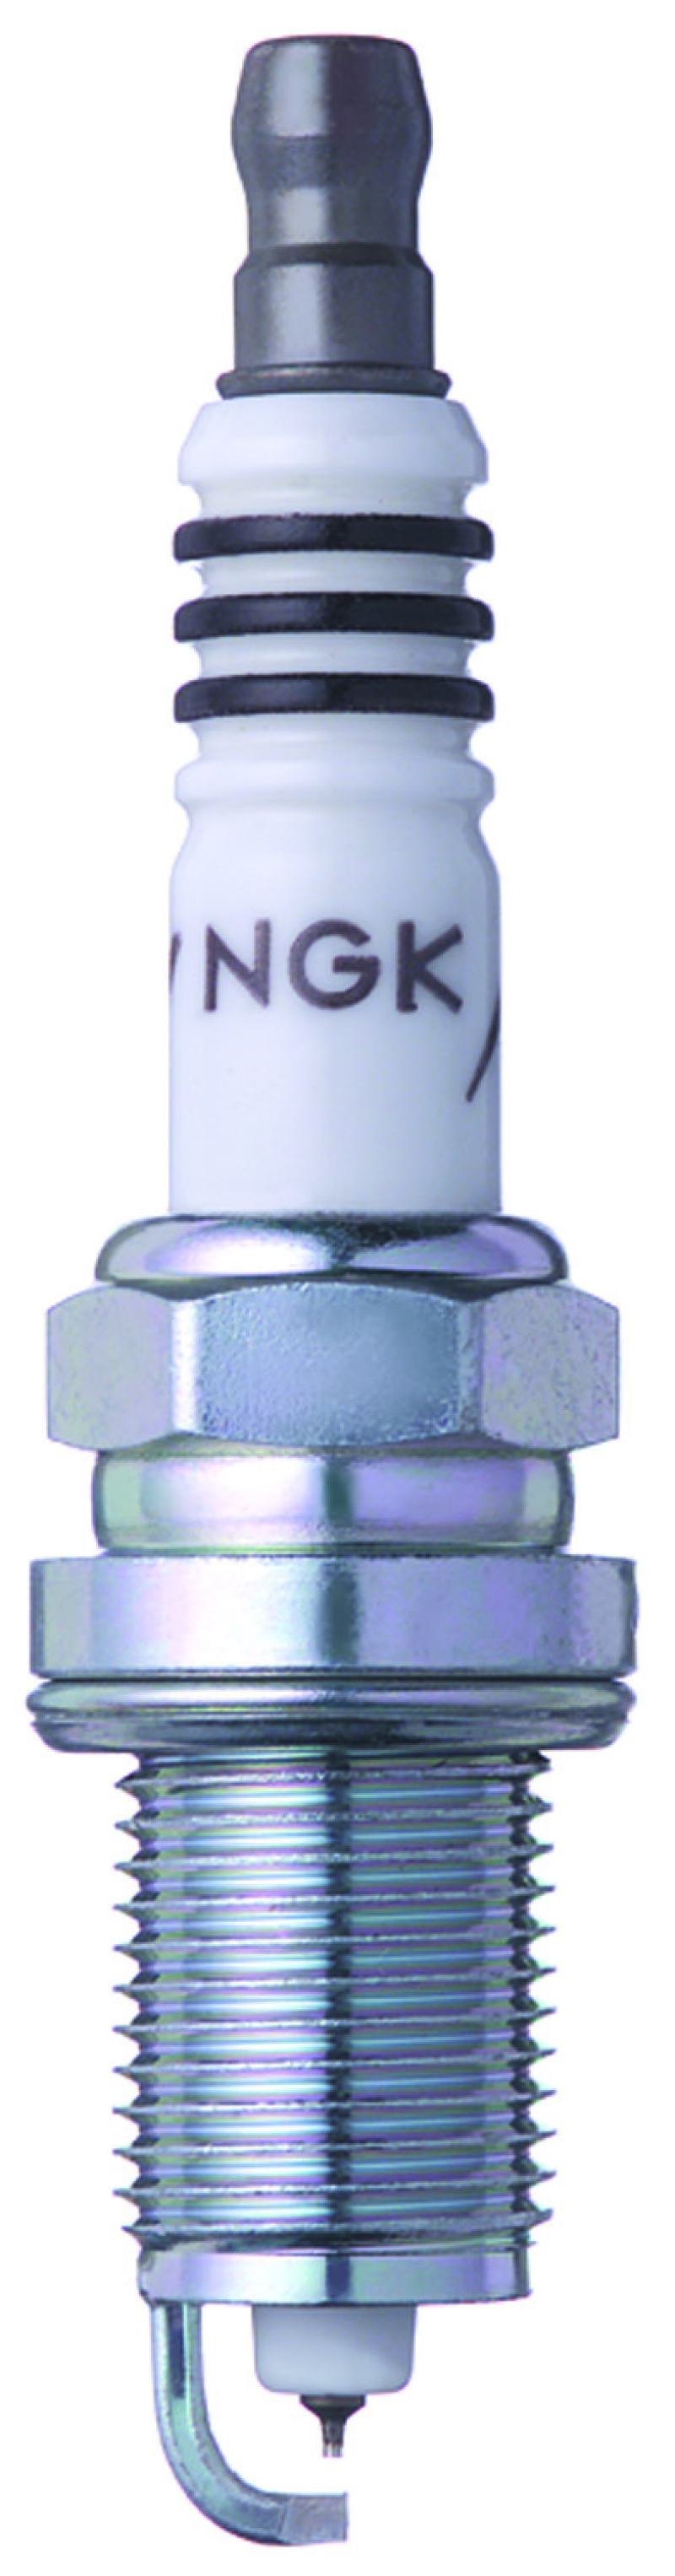 NGK Laser Iridium Spark Plug Box of 4 (IZFR6H11) - 4294